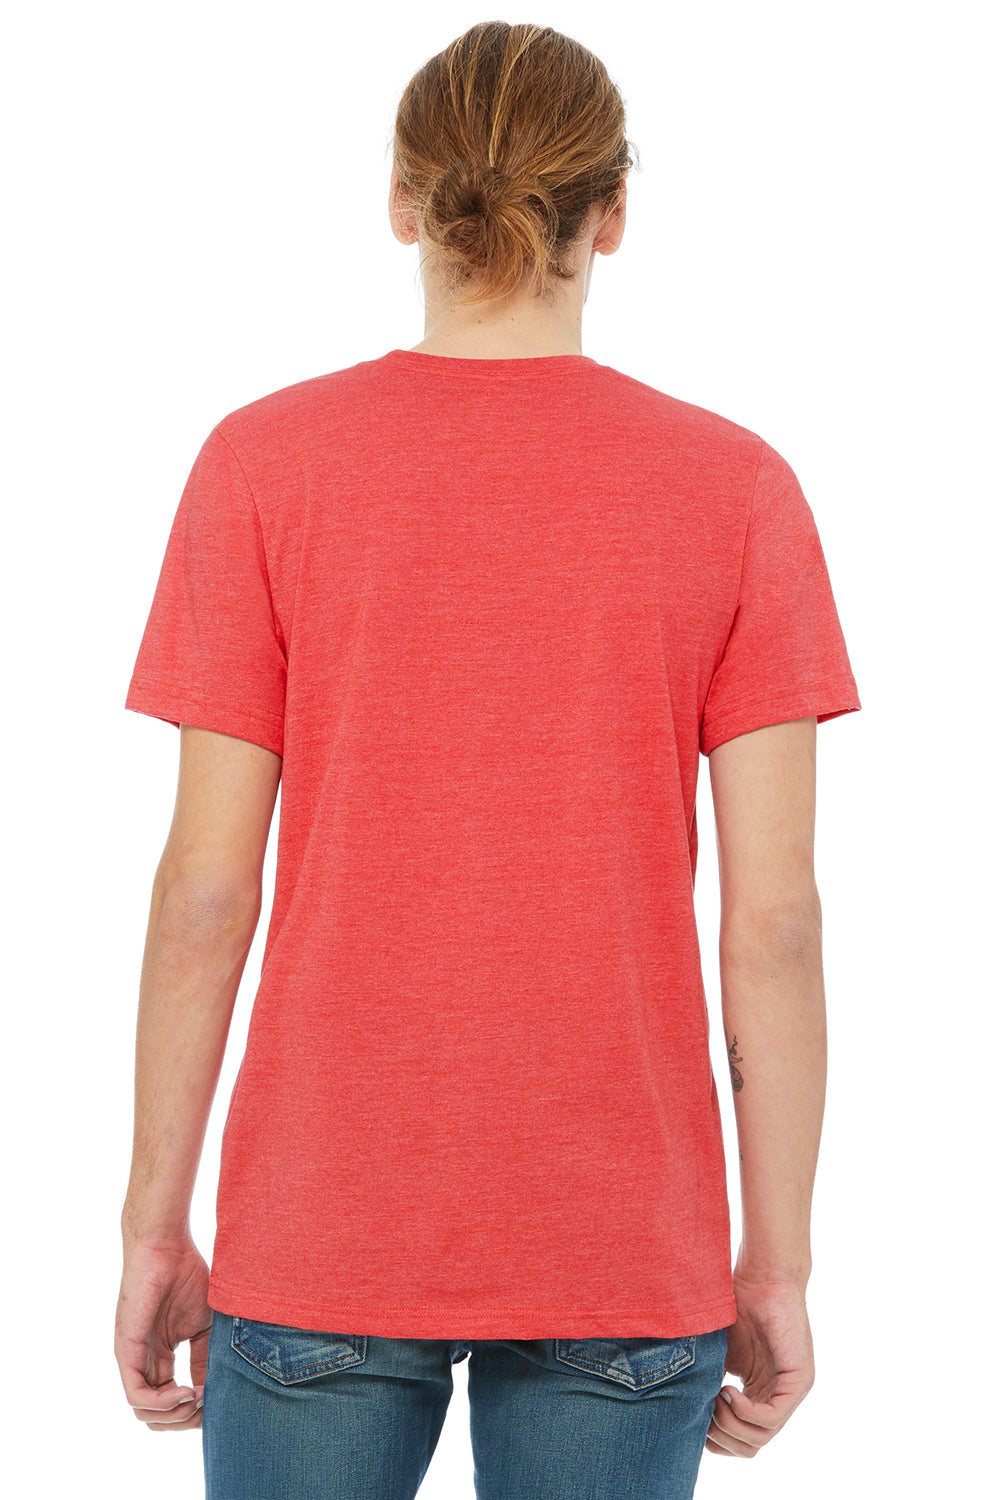 Bella + Canvas 3021 Mens Jersey Short Sleeve Crewneck T-Shirt w/ Pocket Heather Red/Heather Grey Back